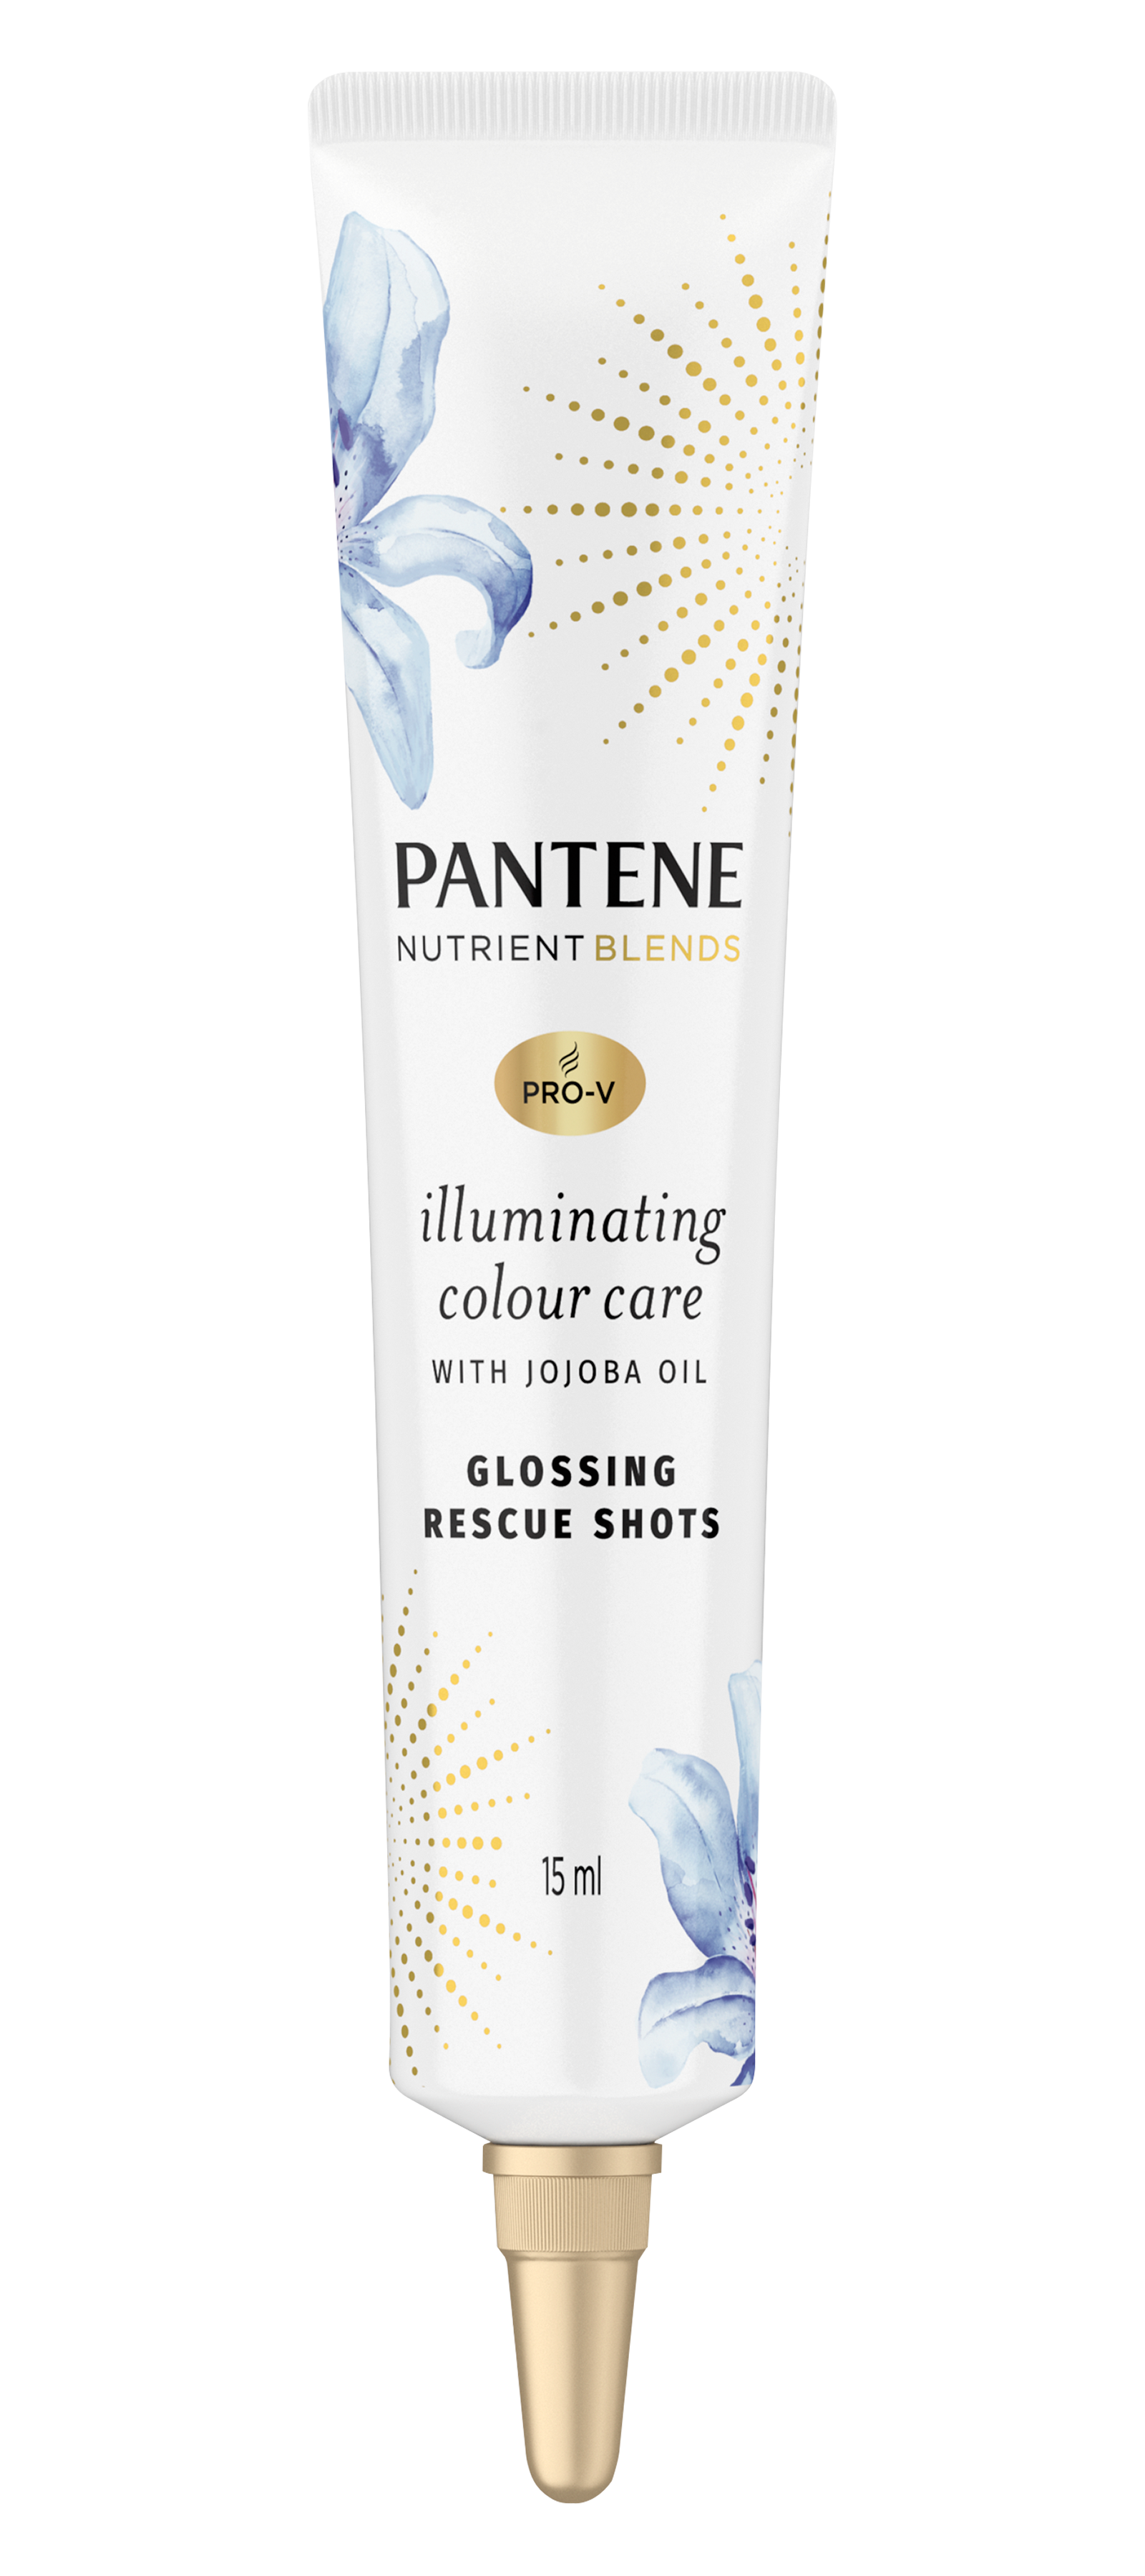 Pantene Nutrient Blends Illuminating Colour Care Glossing Rescue Shots Treatment with Jojoba Oil